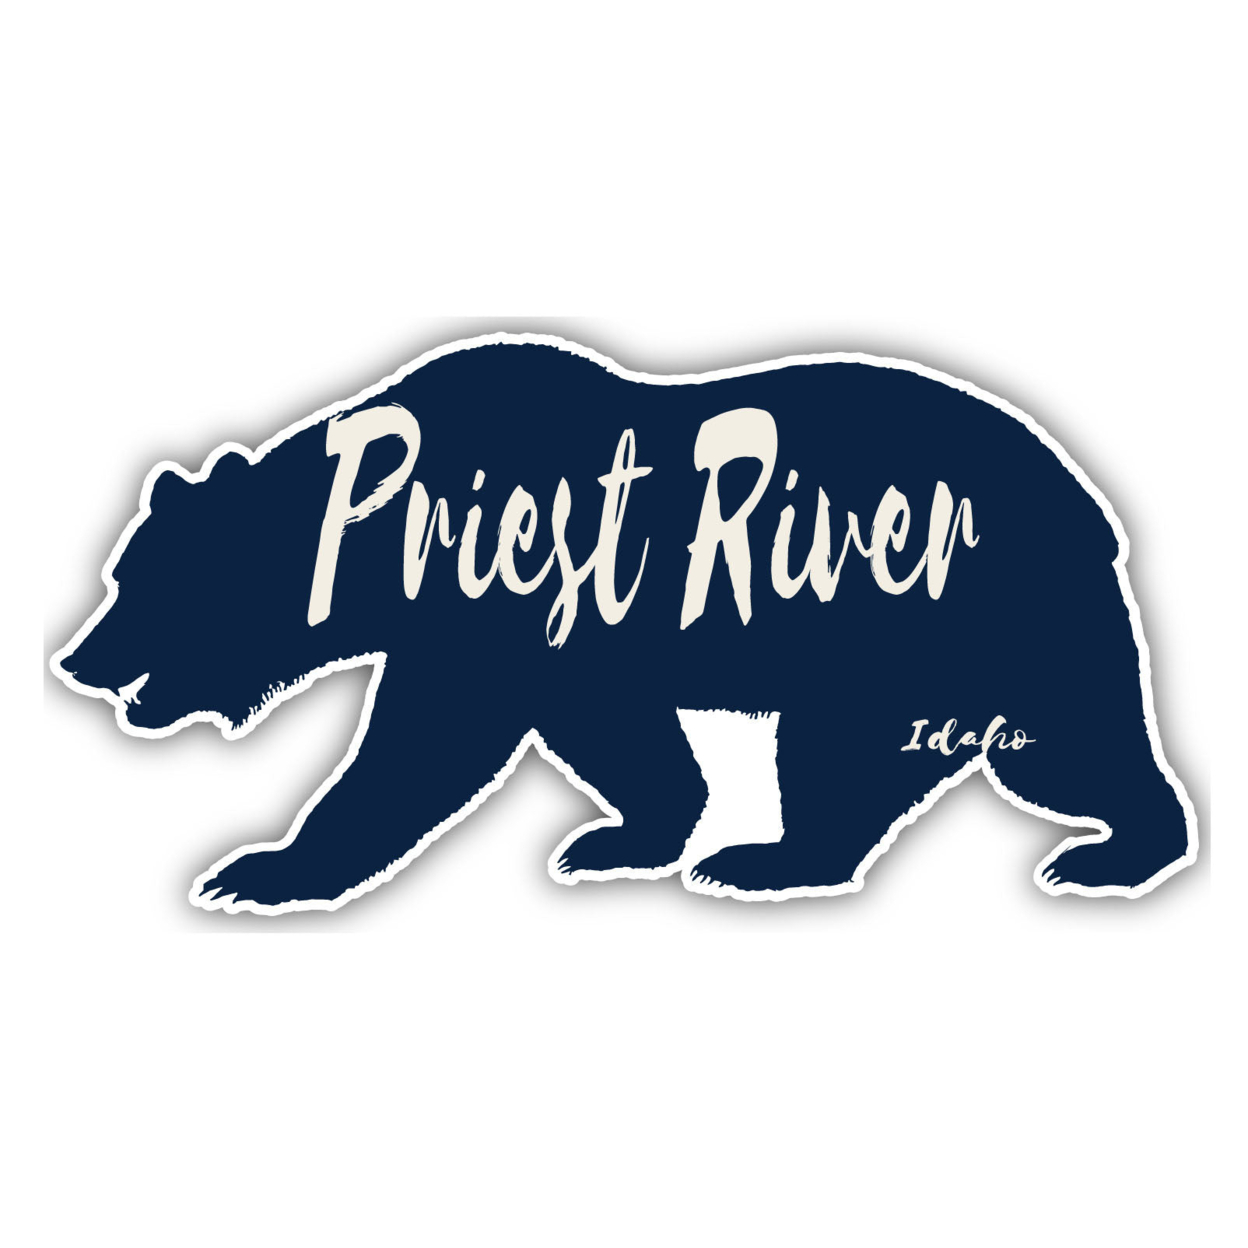 Priest River Idaho Souvenir Decorative Stickers (Choose Theme And Size) - Single Unit, 2-Inch, Camp Life